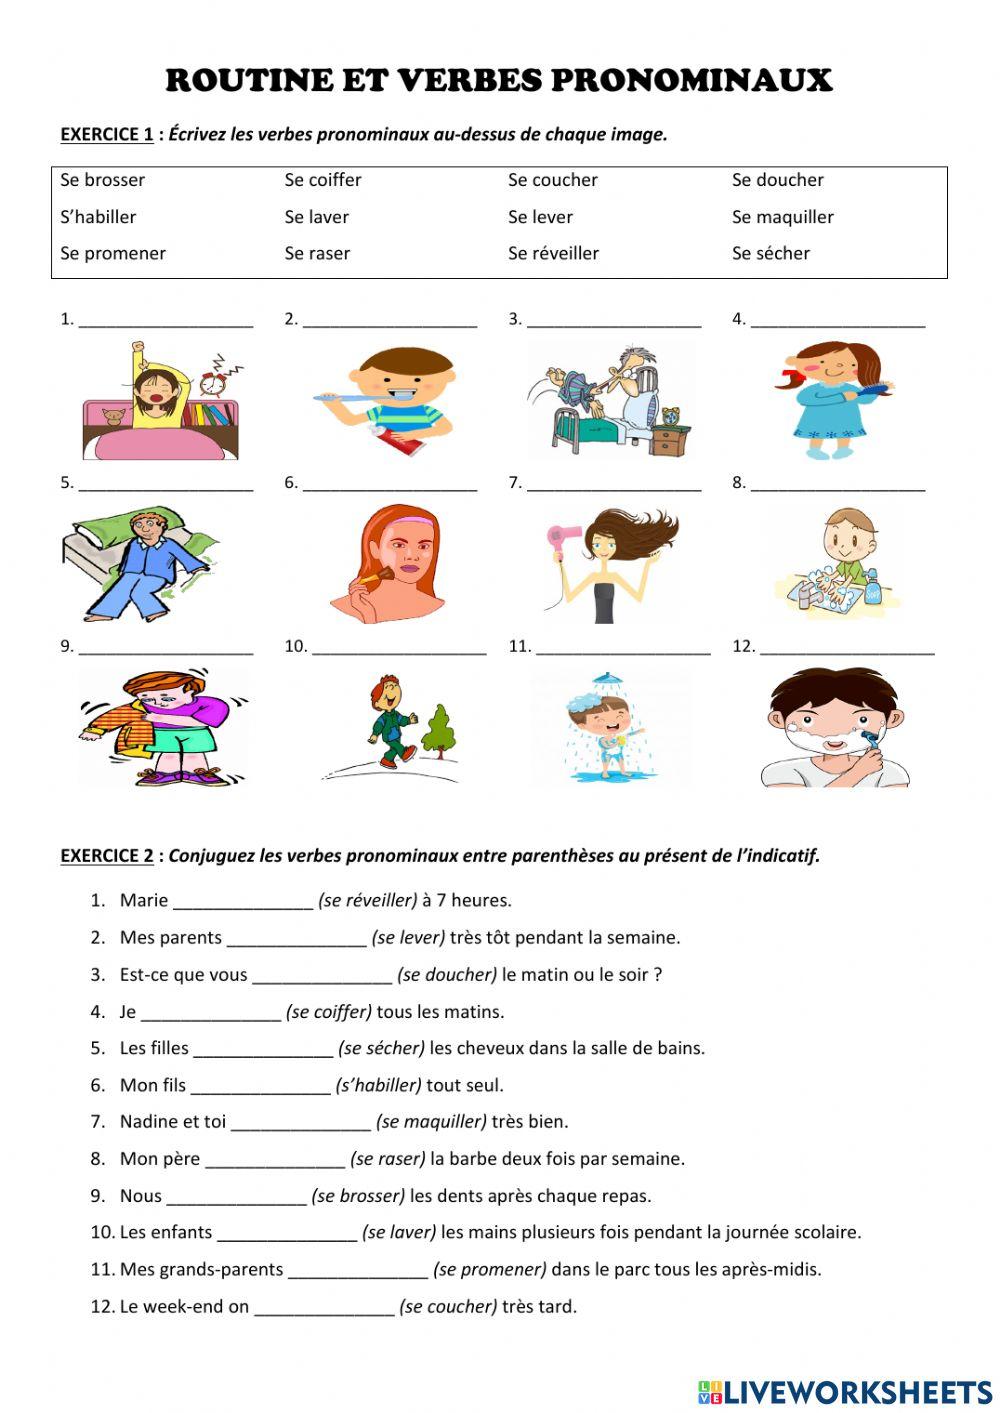 Routine et verbes pronominaux worksheet | Live Worksheets